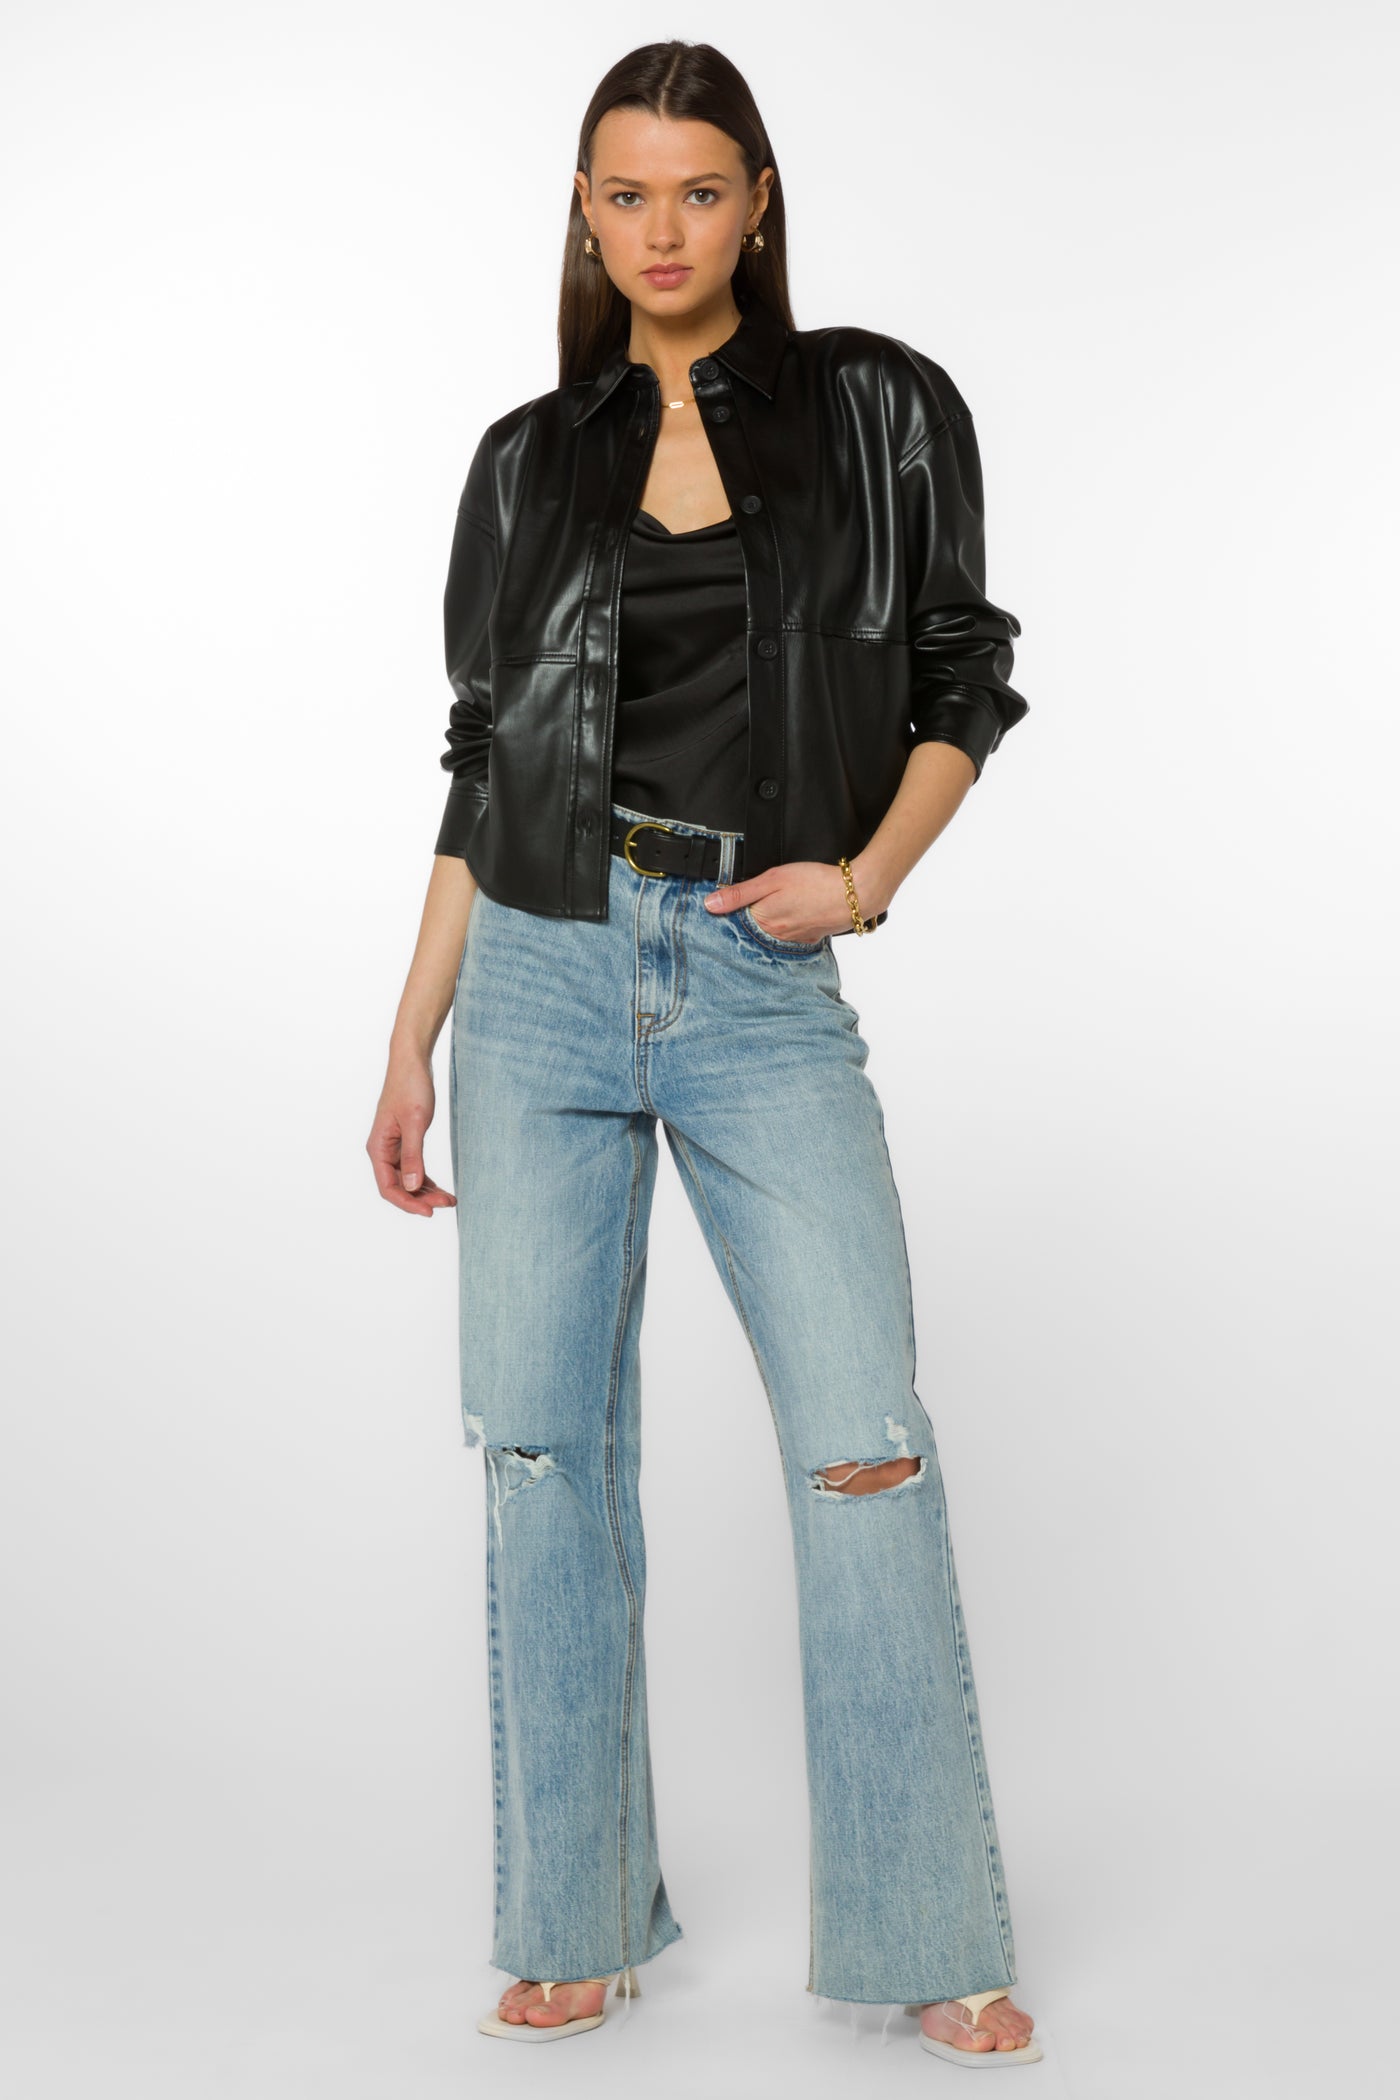 Halo Black Leather Jacket - Jackets & Outerwear - Velvet Heart Clothing